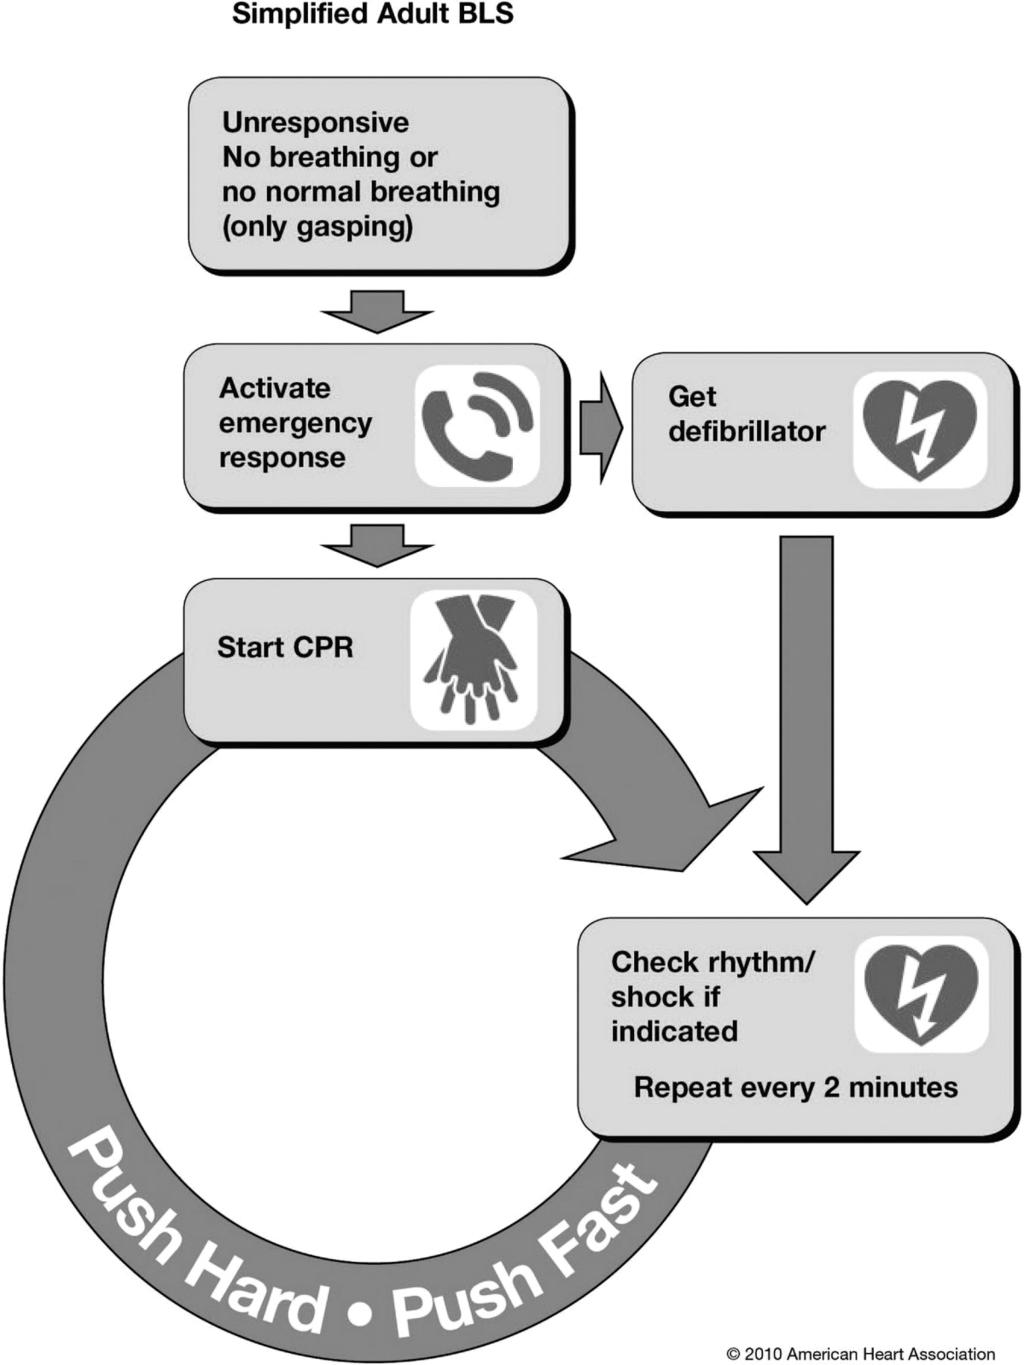 2010 CPR (Cardio Pulmonary Resuscitation) Guidelines 정리하기 심정지상태를즉시인지한다. 응급의료체계에연락하고, AED 를요청한다.